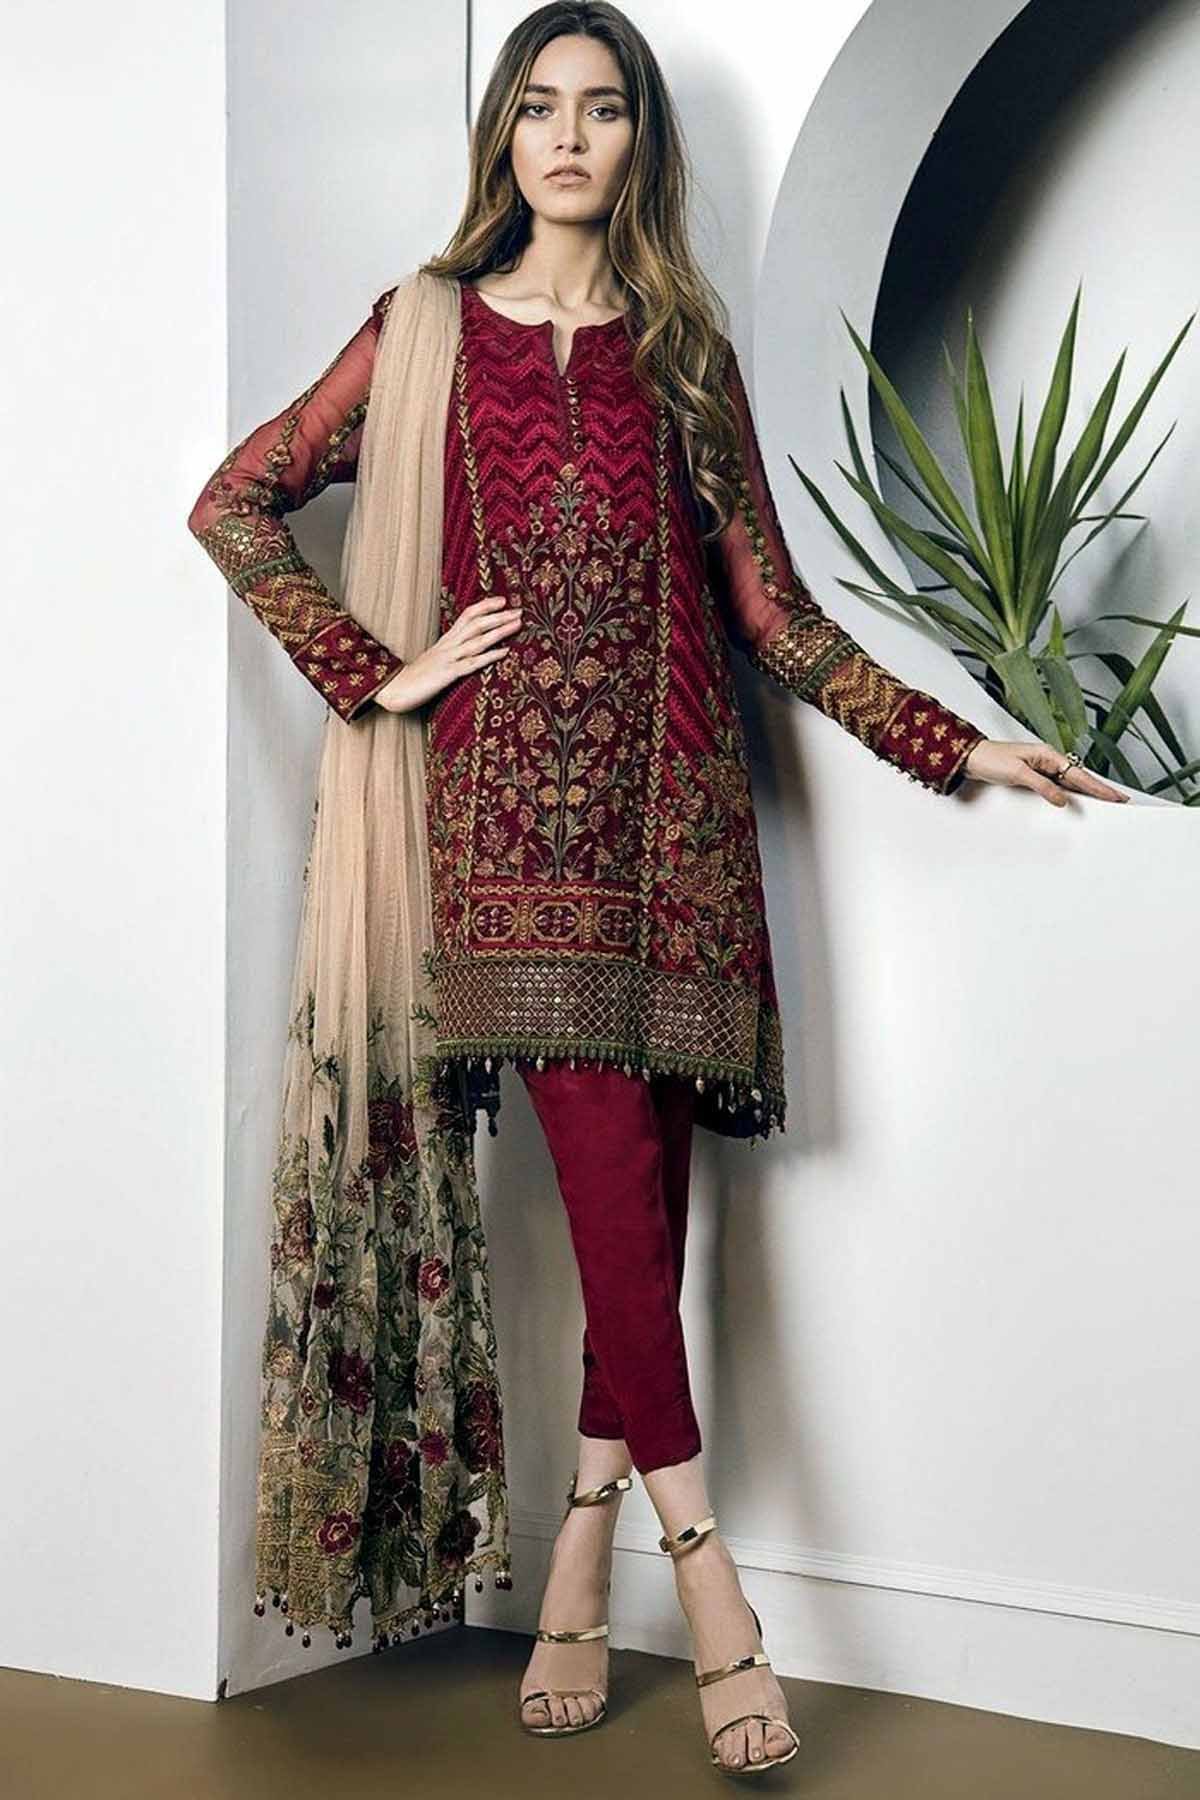 Boroque women new dress design empires collection pakistan top brand clothing brand fashion 3 piece suit